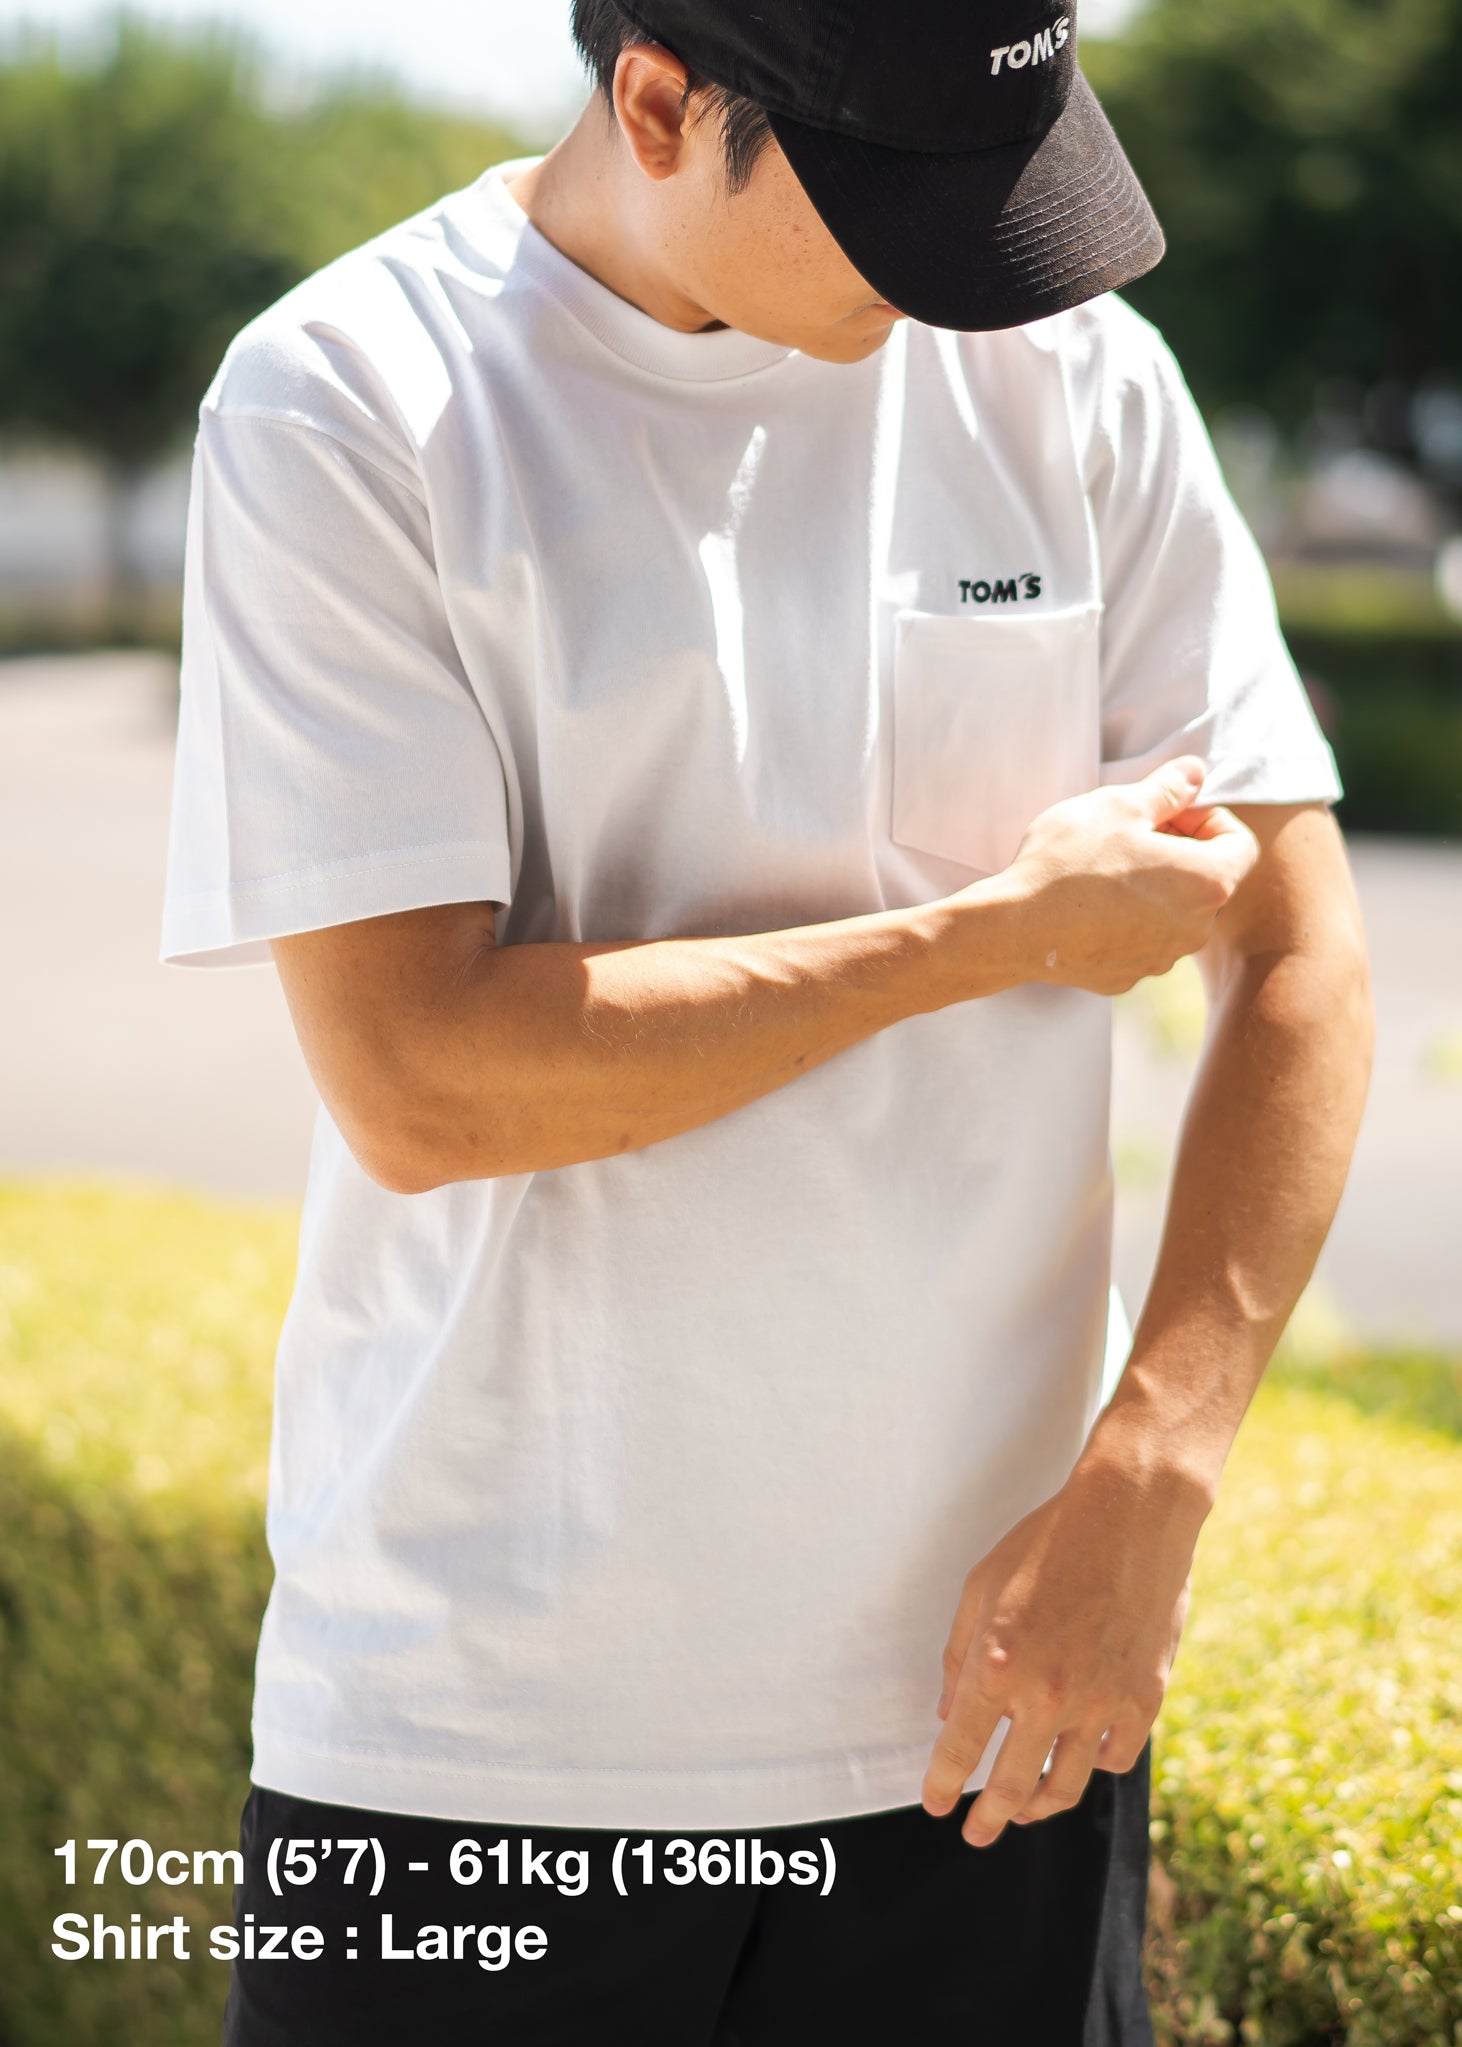 TOM'S Racing - Pocket T-Shirt (White or Black) T-Shirt